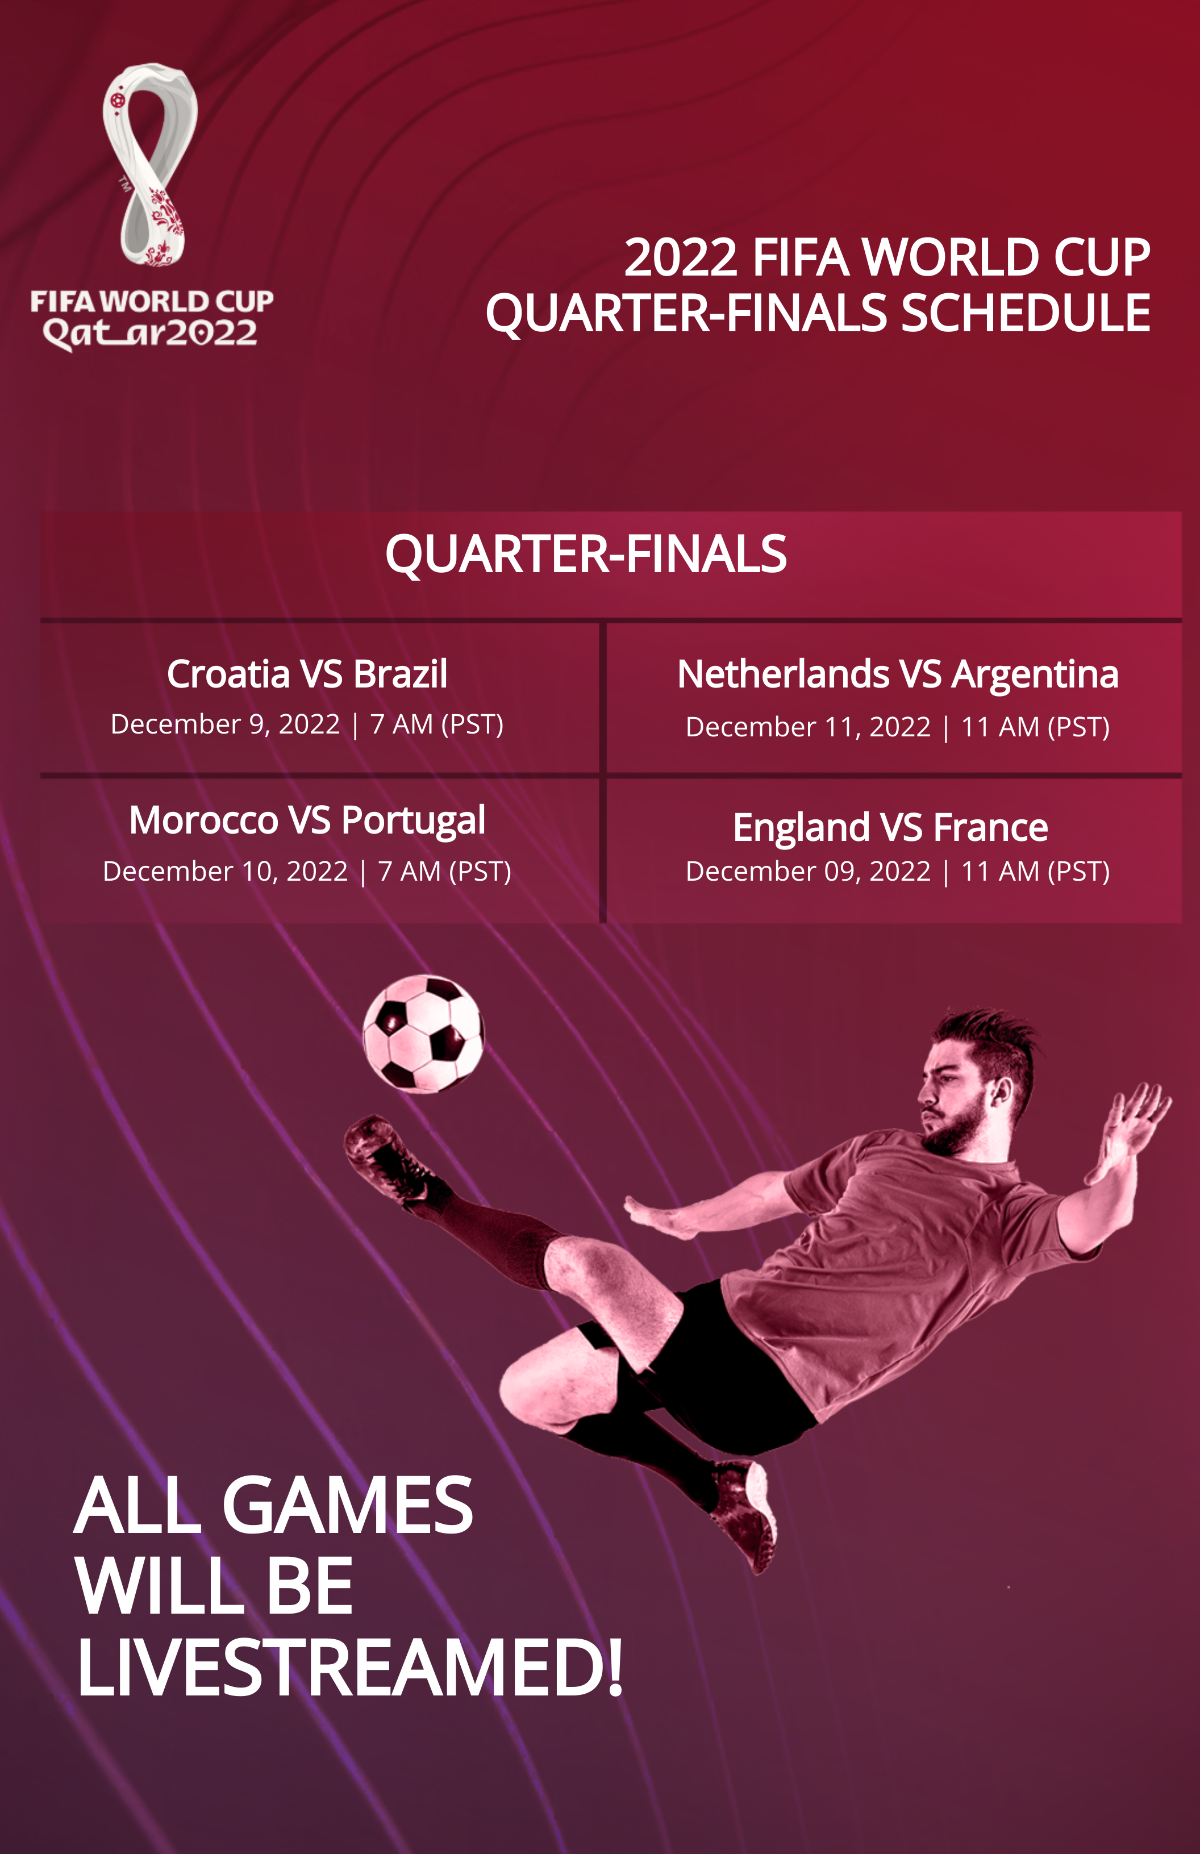 FIFA World Cup 2022 Quarter-Finals Schedule Poster Template